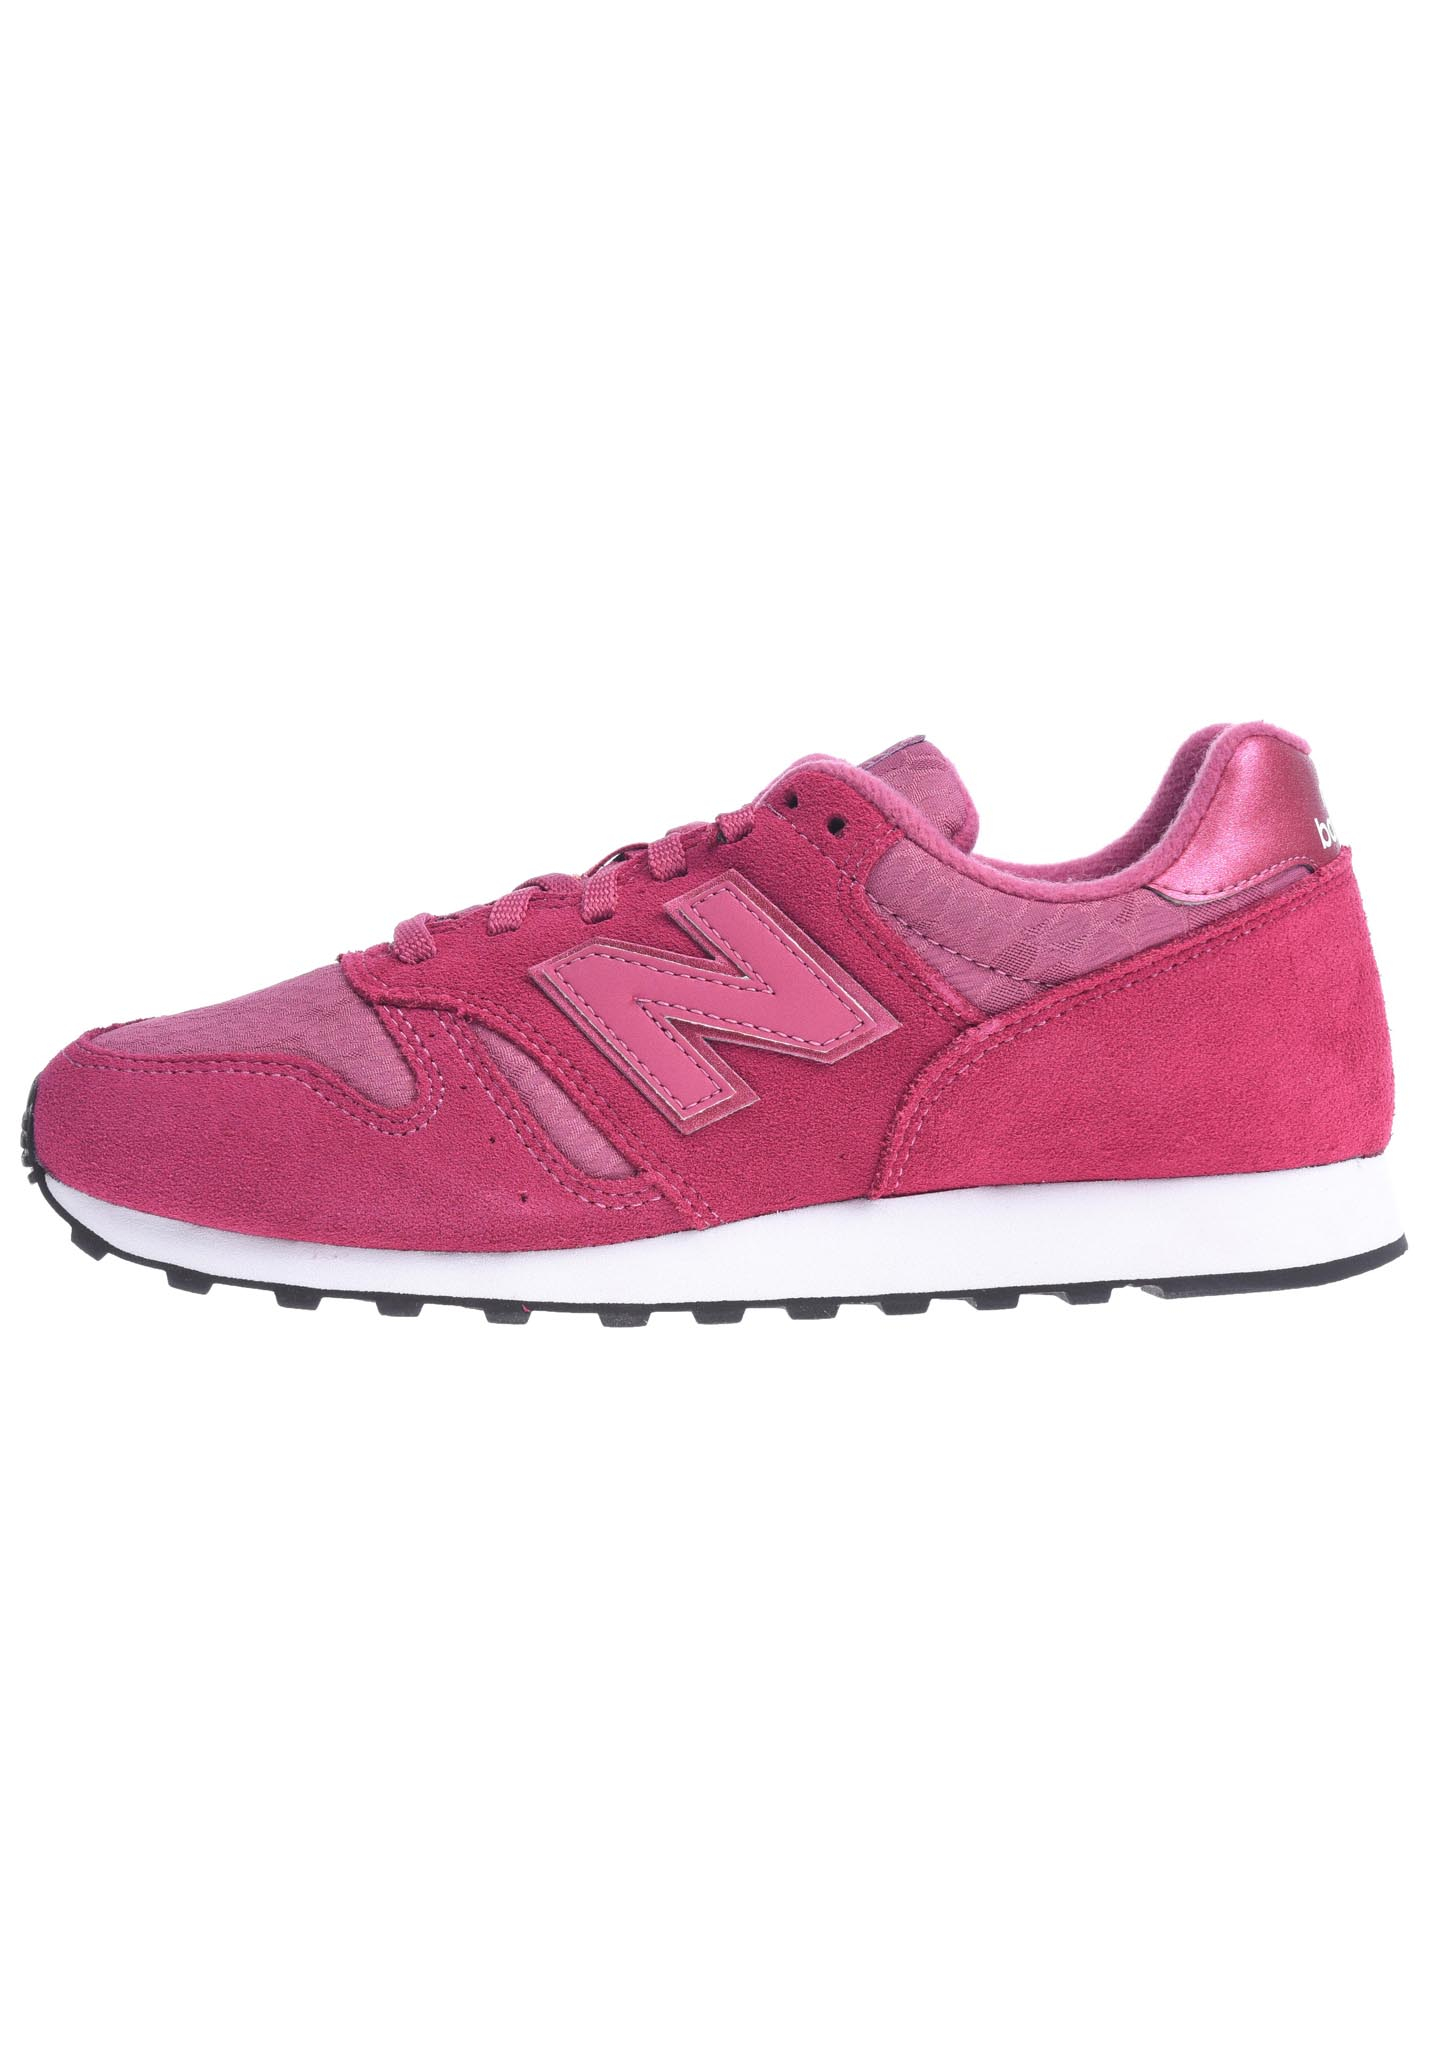 New Balance WL373 B Sneaker Low pink/white 41,5